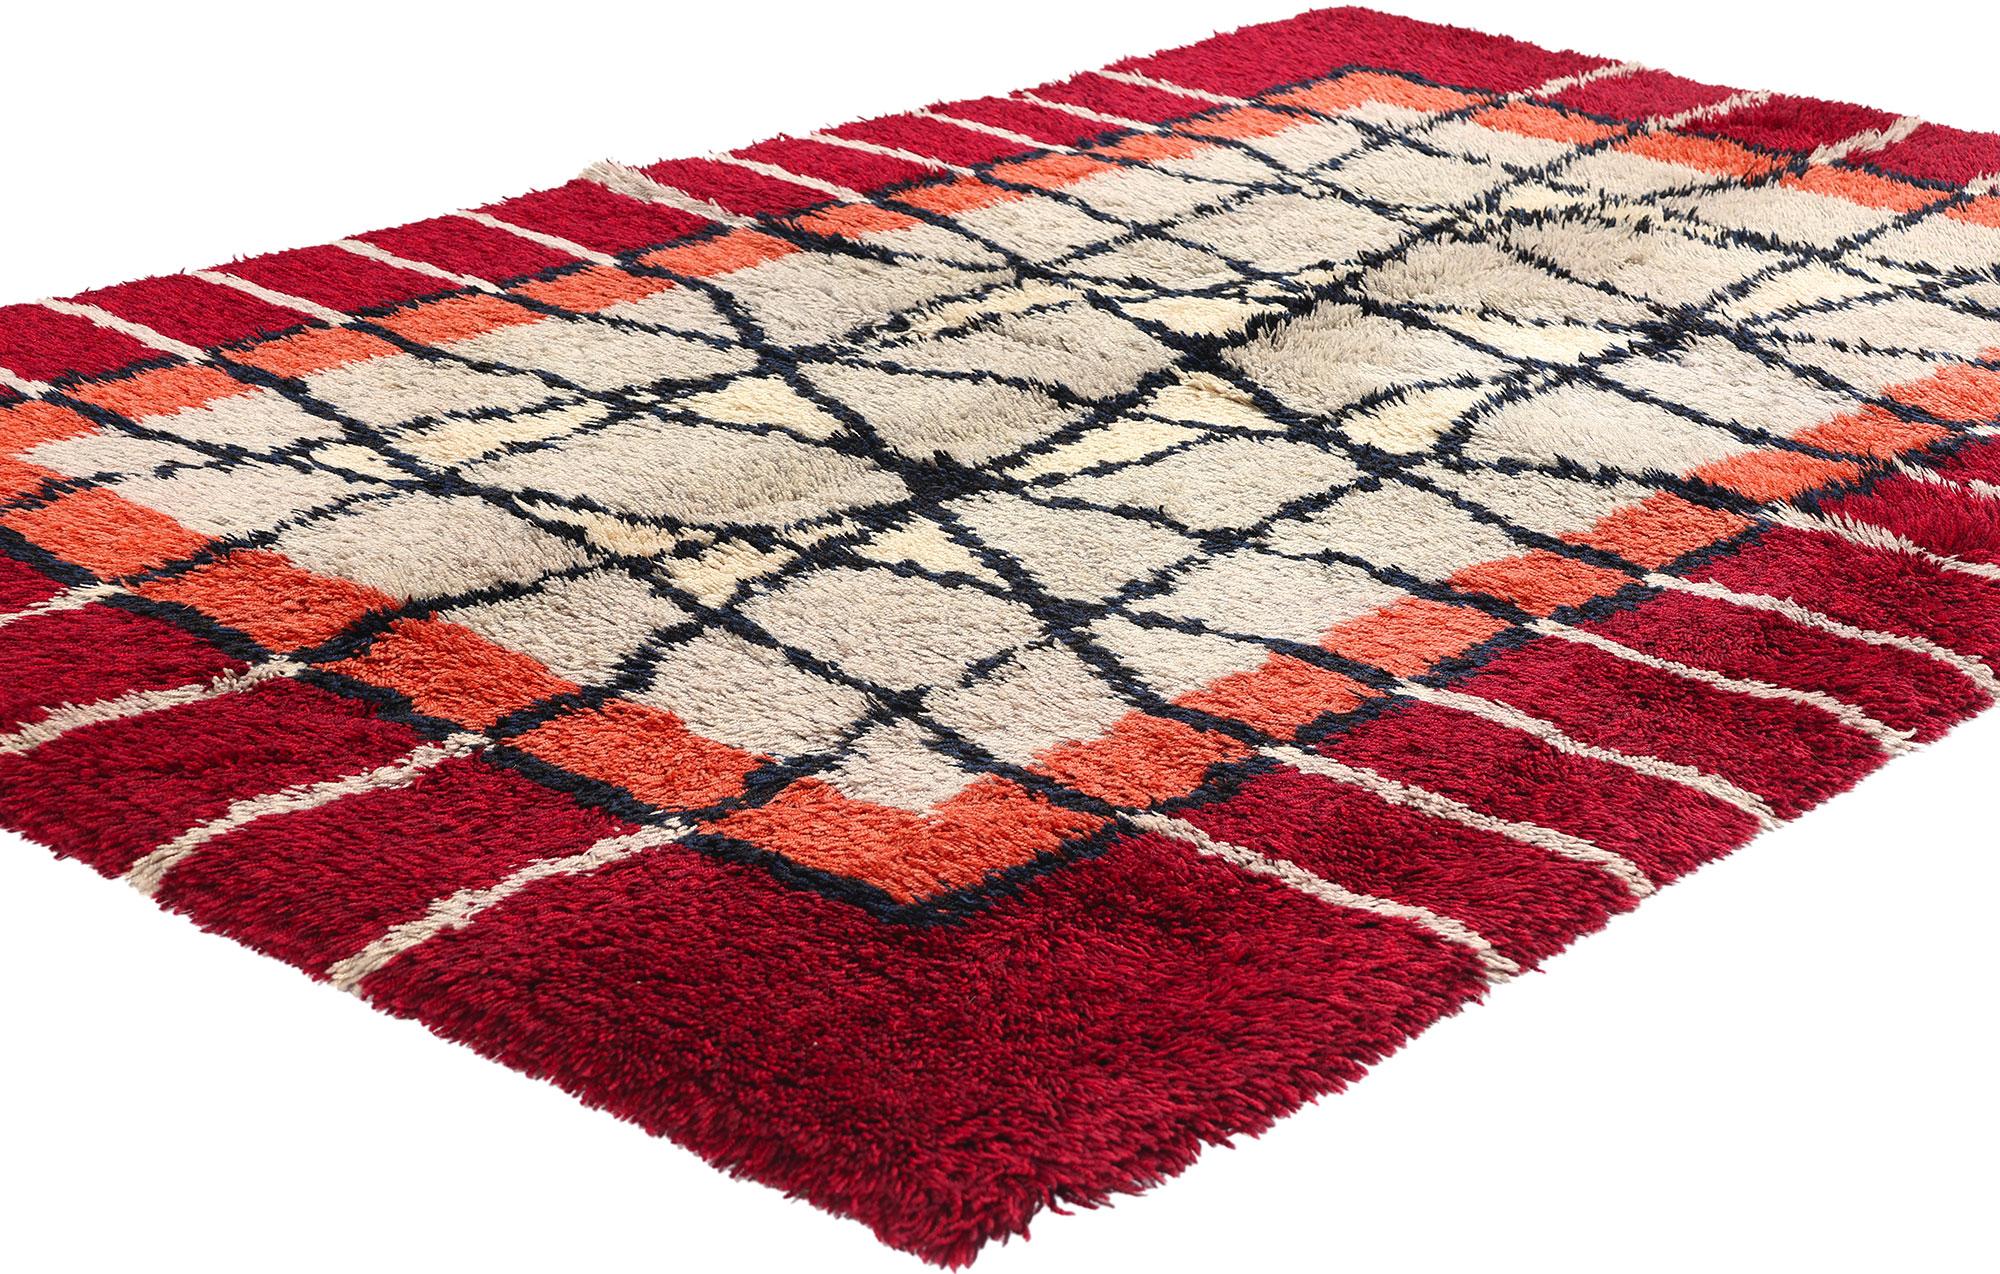 78278 Ulla Kronlof Vintage Swedish Rya Rug, 04'04 x 06'10. Scandinavian Swedish rya rugs designed by Ulla Kronlof are renowned for their long-pile texture and intricate designs. Kronlof’s work blends modern art and traditional Scandinavian patterns,